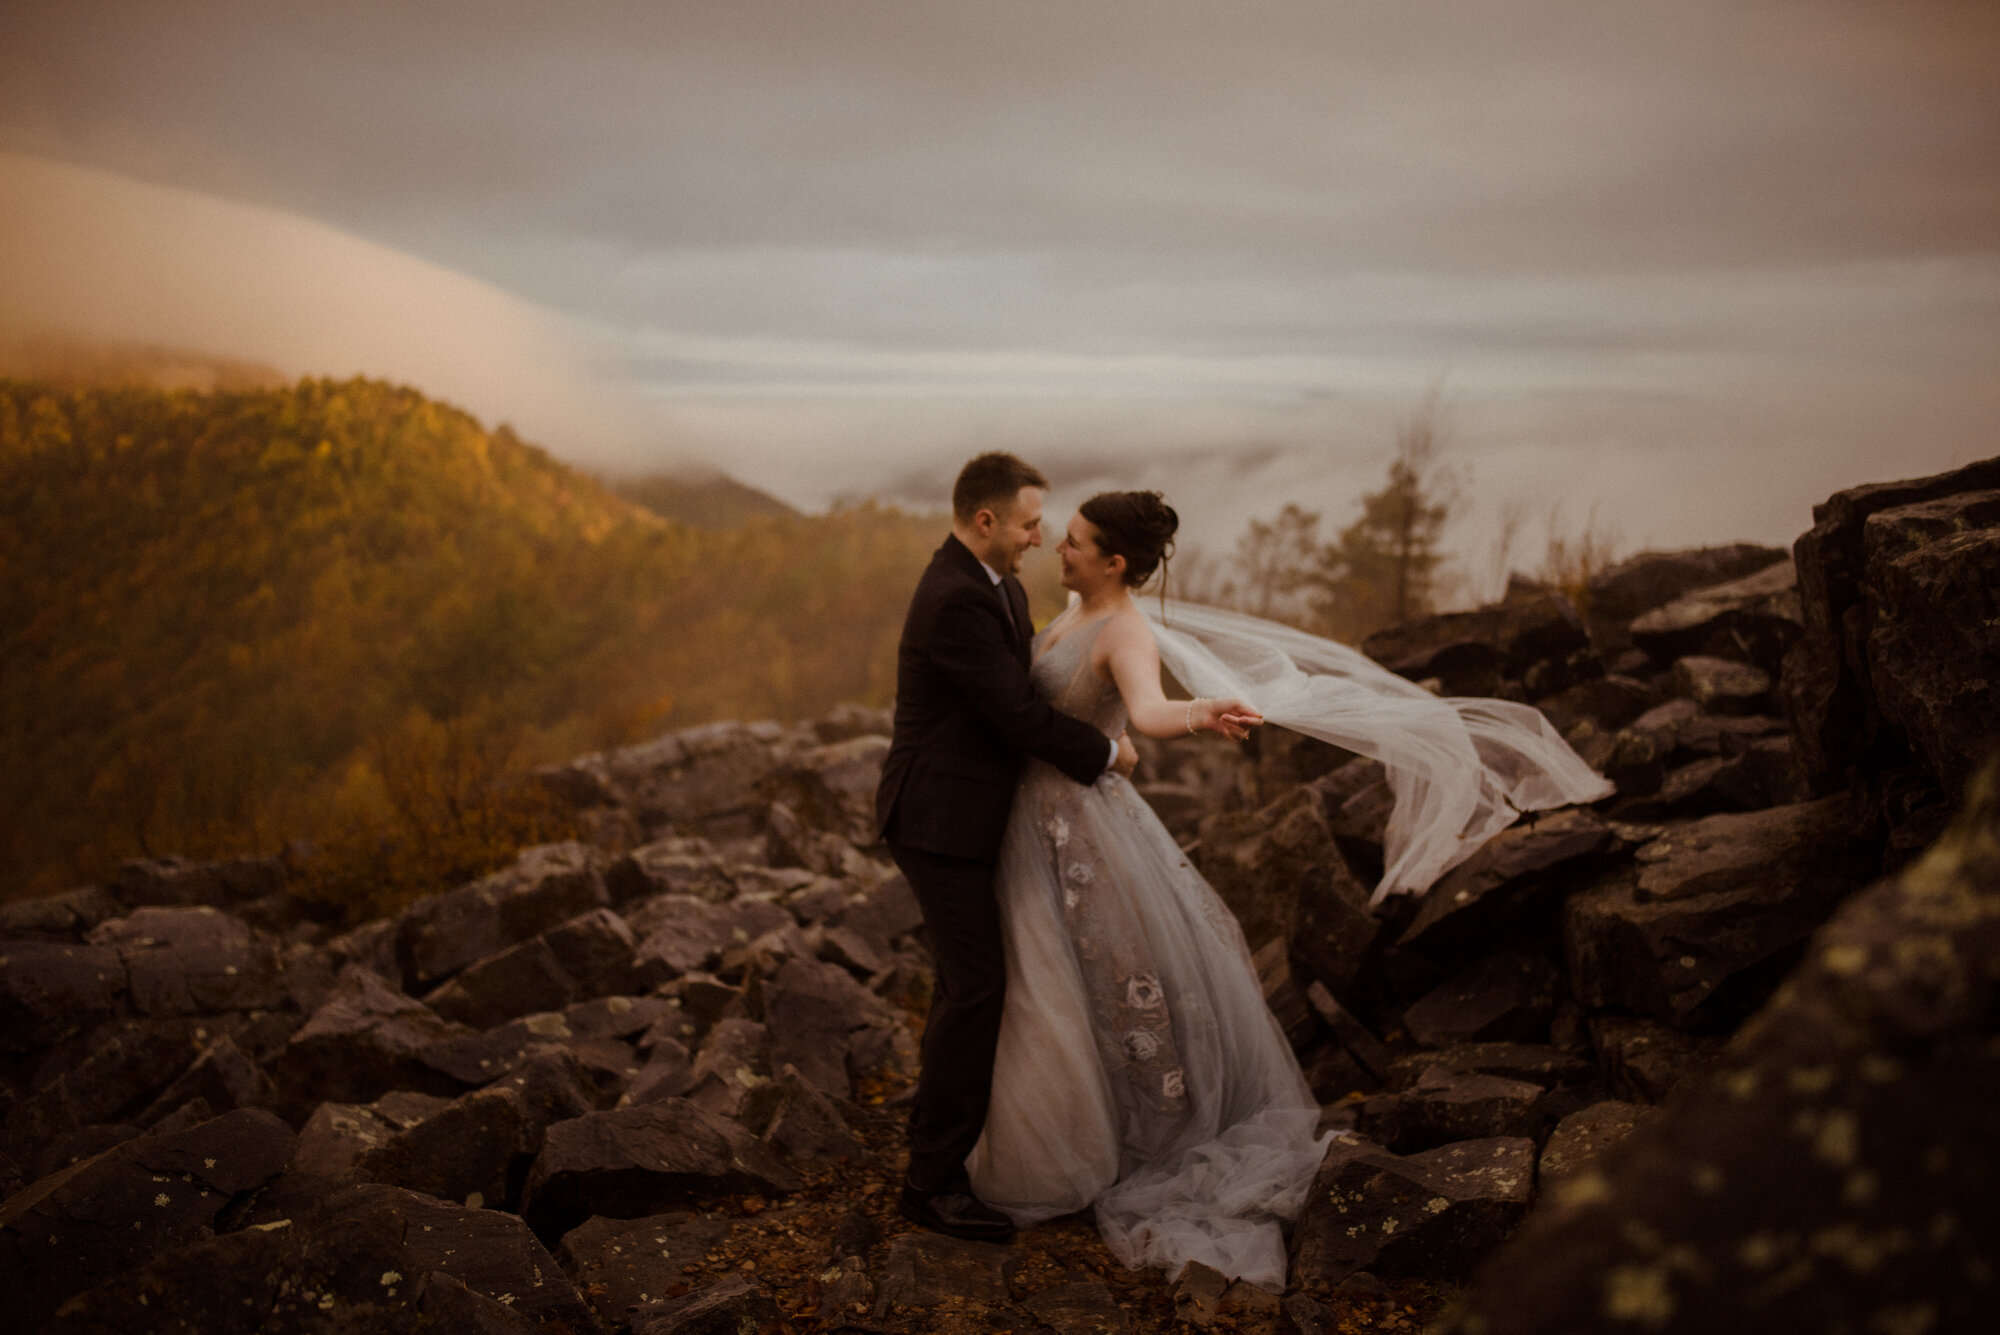 Wedding Ceremony in Shenandoah National Park - Black Rock Hike Elopement - Blue Ridge Parkway Wedding in the Fall - White Sails Creative_18.jpg